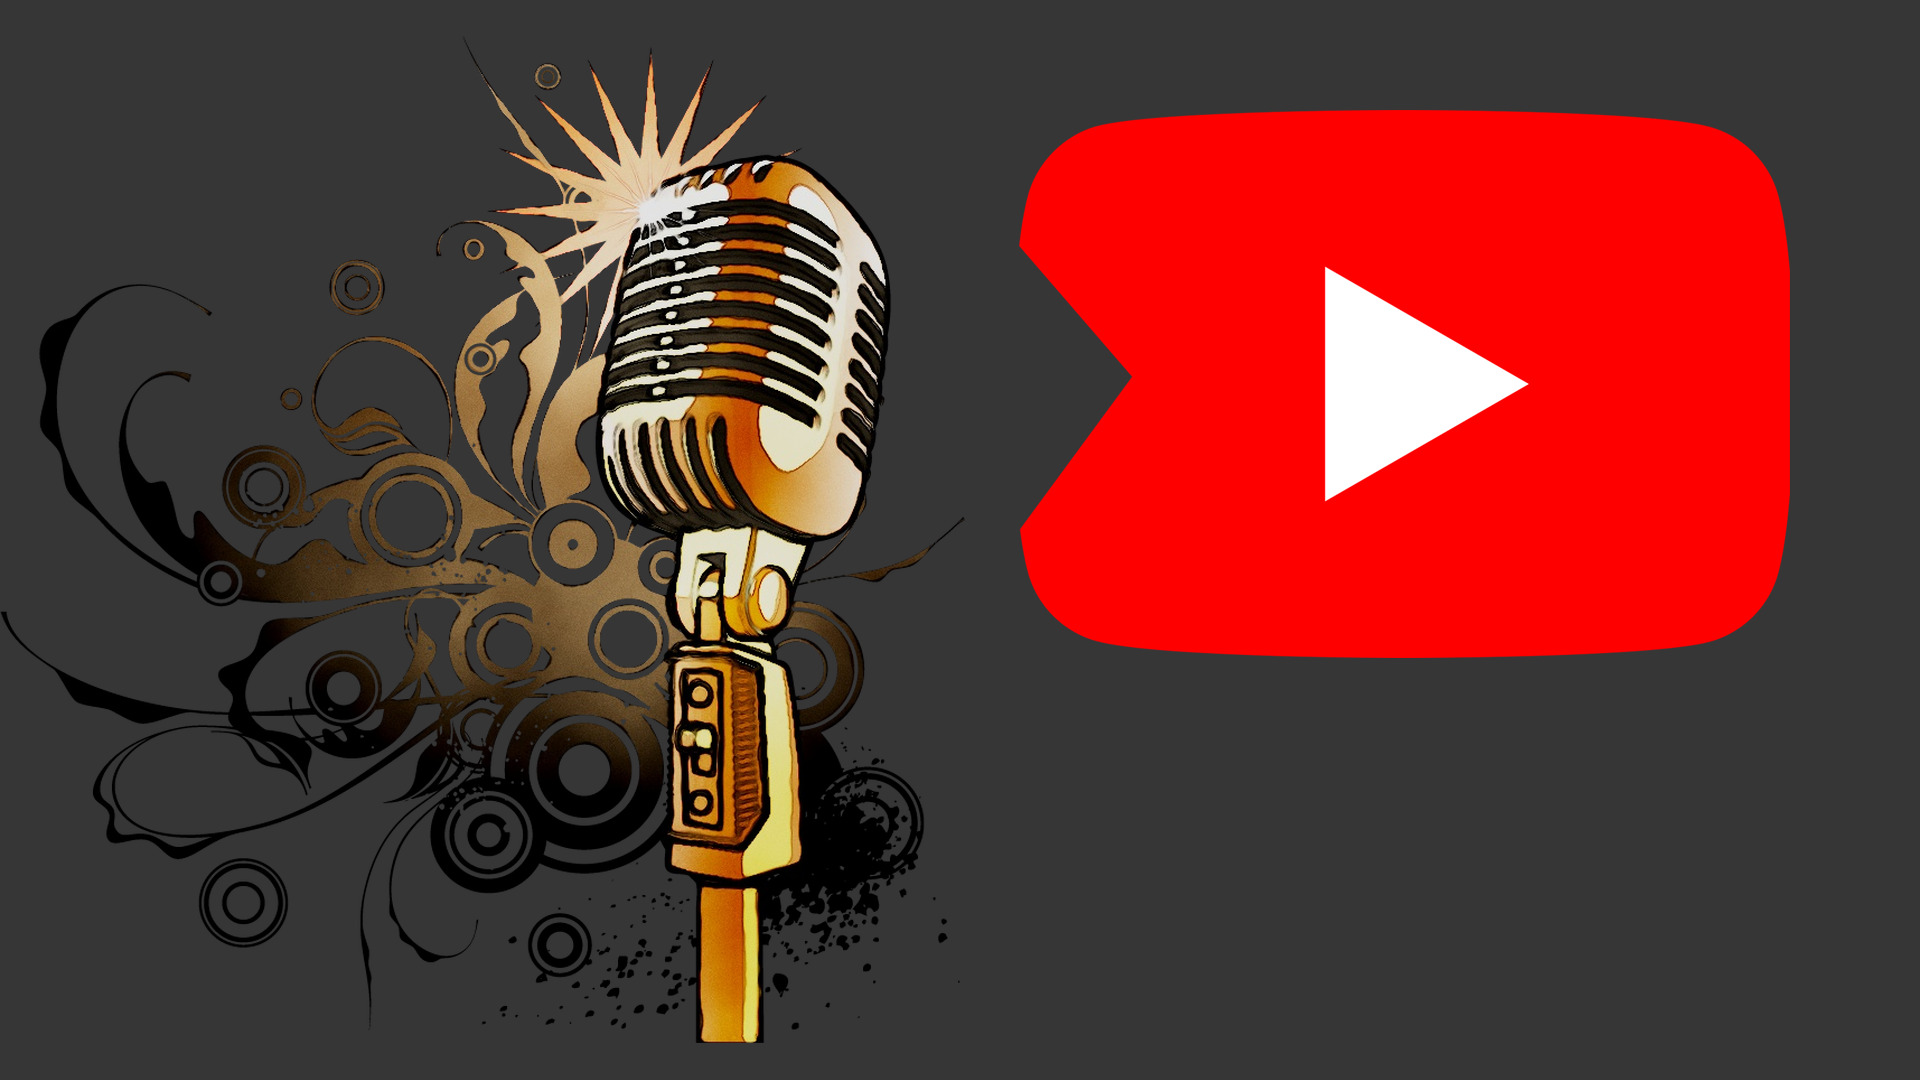 YouTube Audio Library, YouTube Audio, Library, YouTube, Audio Library, YouTube, Audio, YouTube Video Views, Buy YouTube Video Views, YouTube Video, Views, Video Views